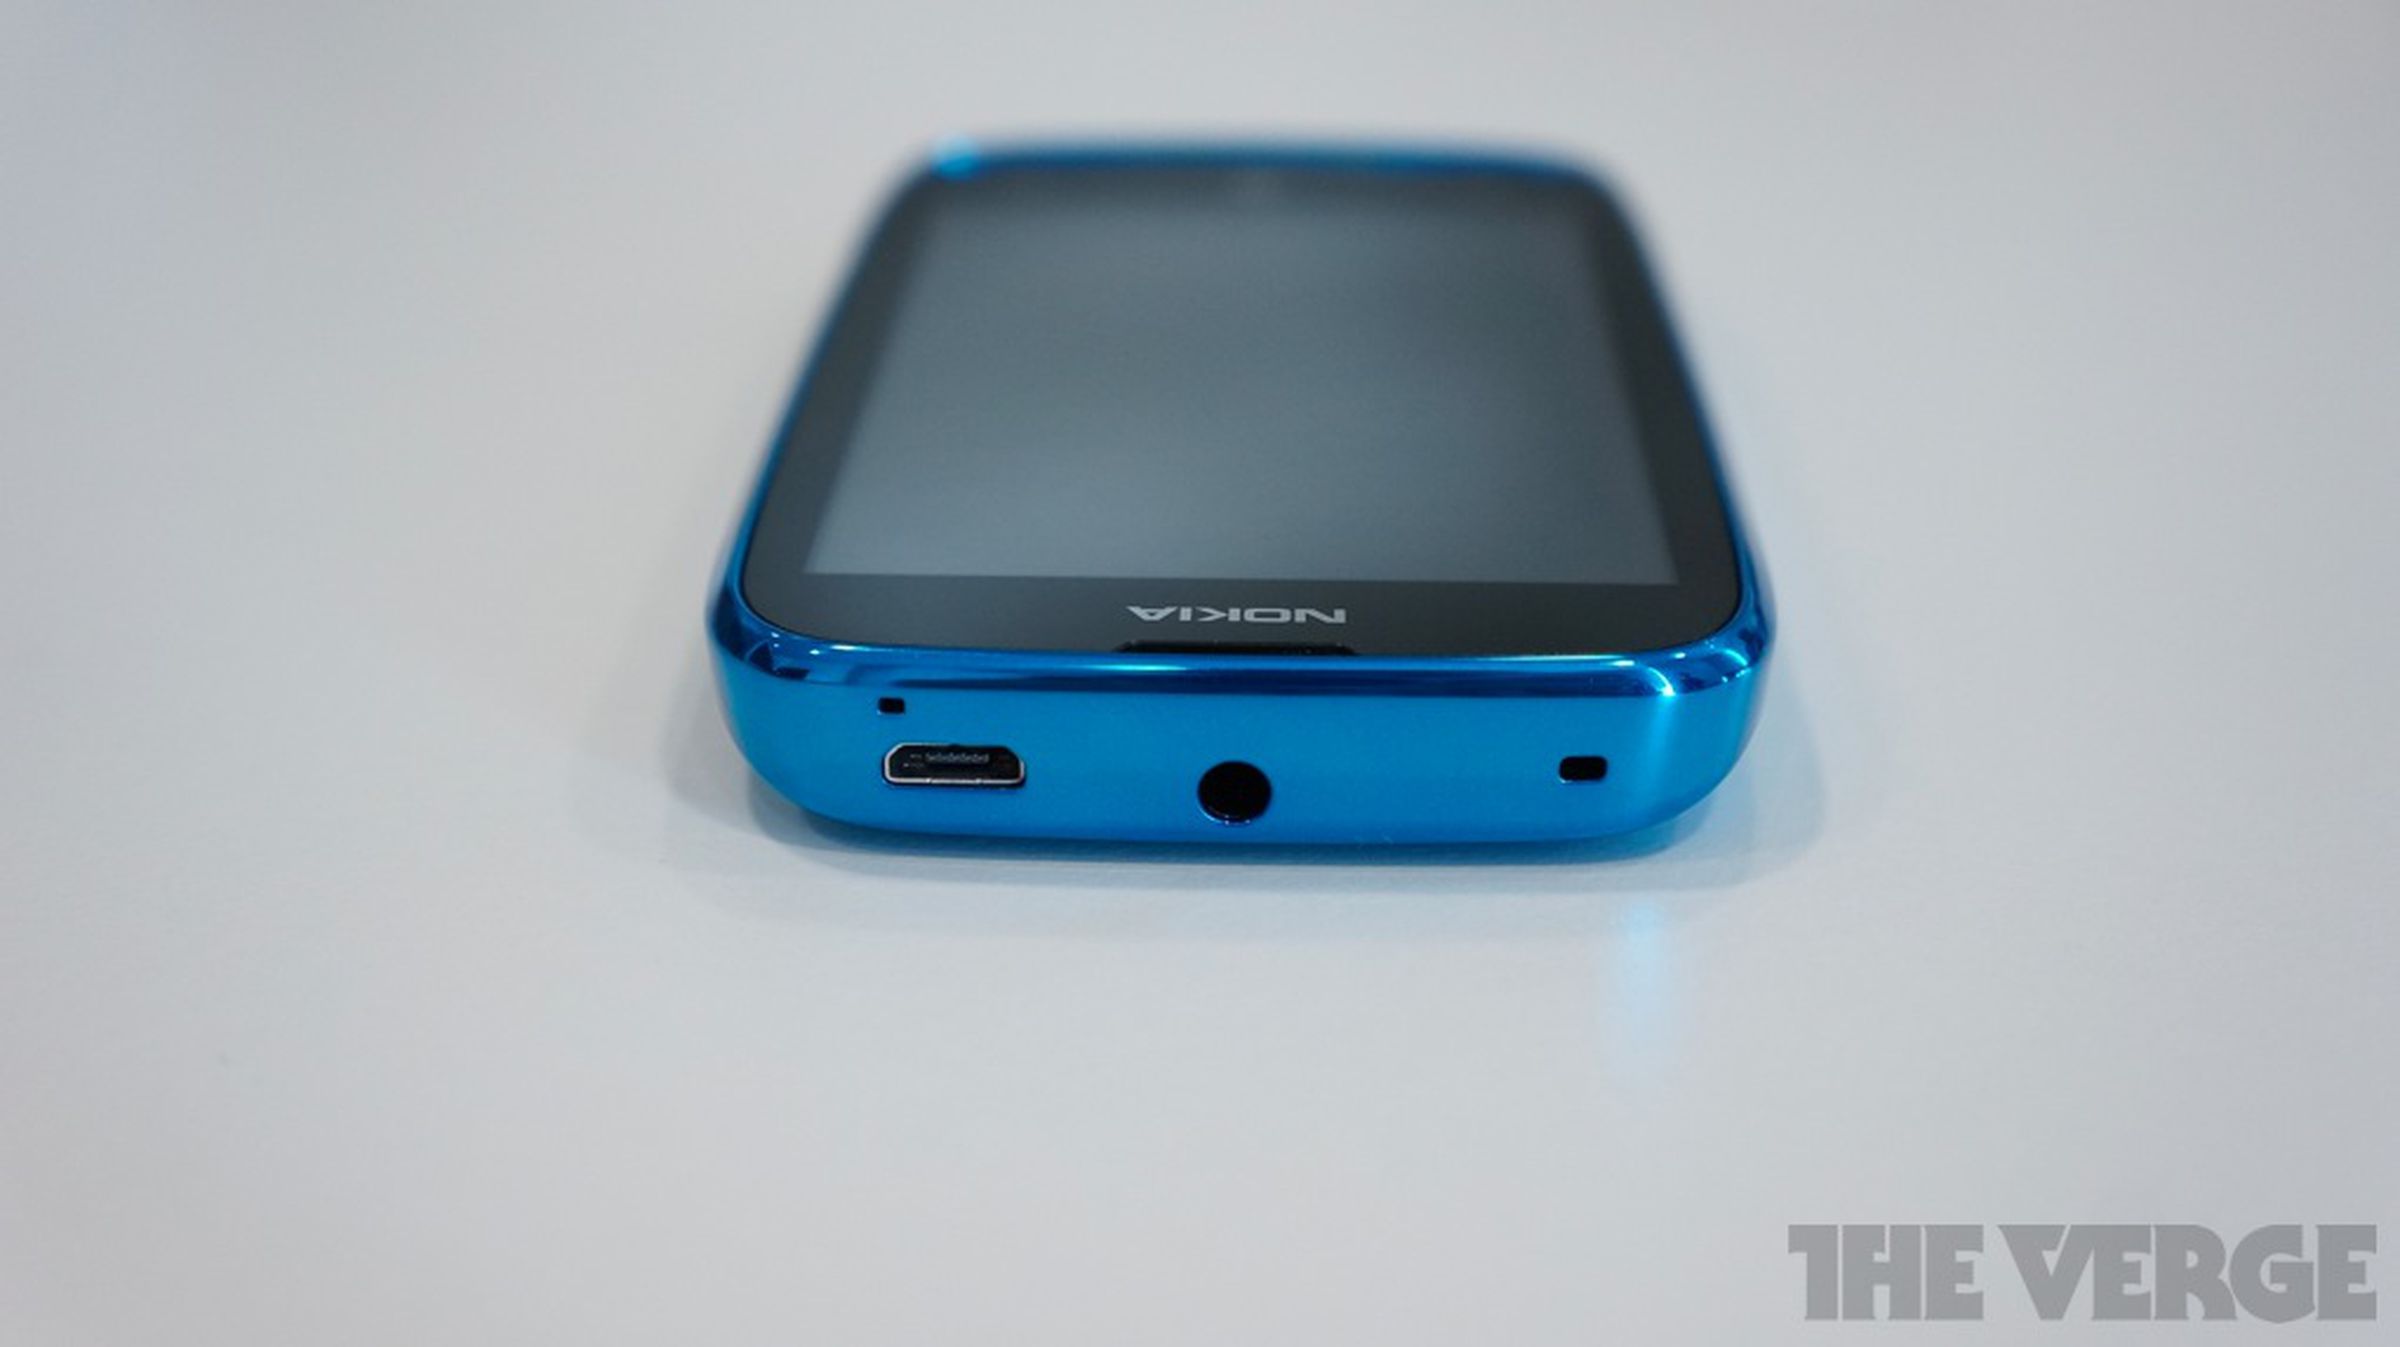 Nokia Lumia 610 hands-on photos